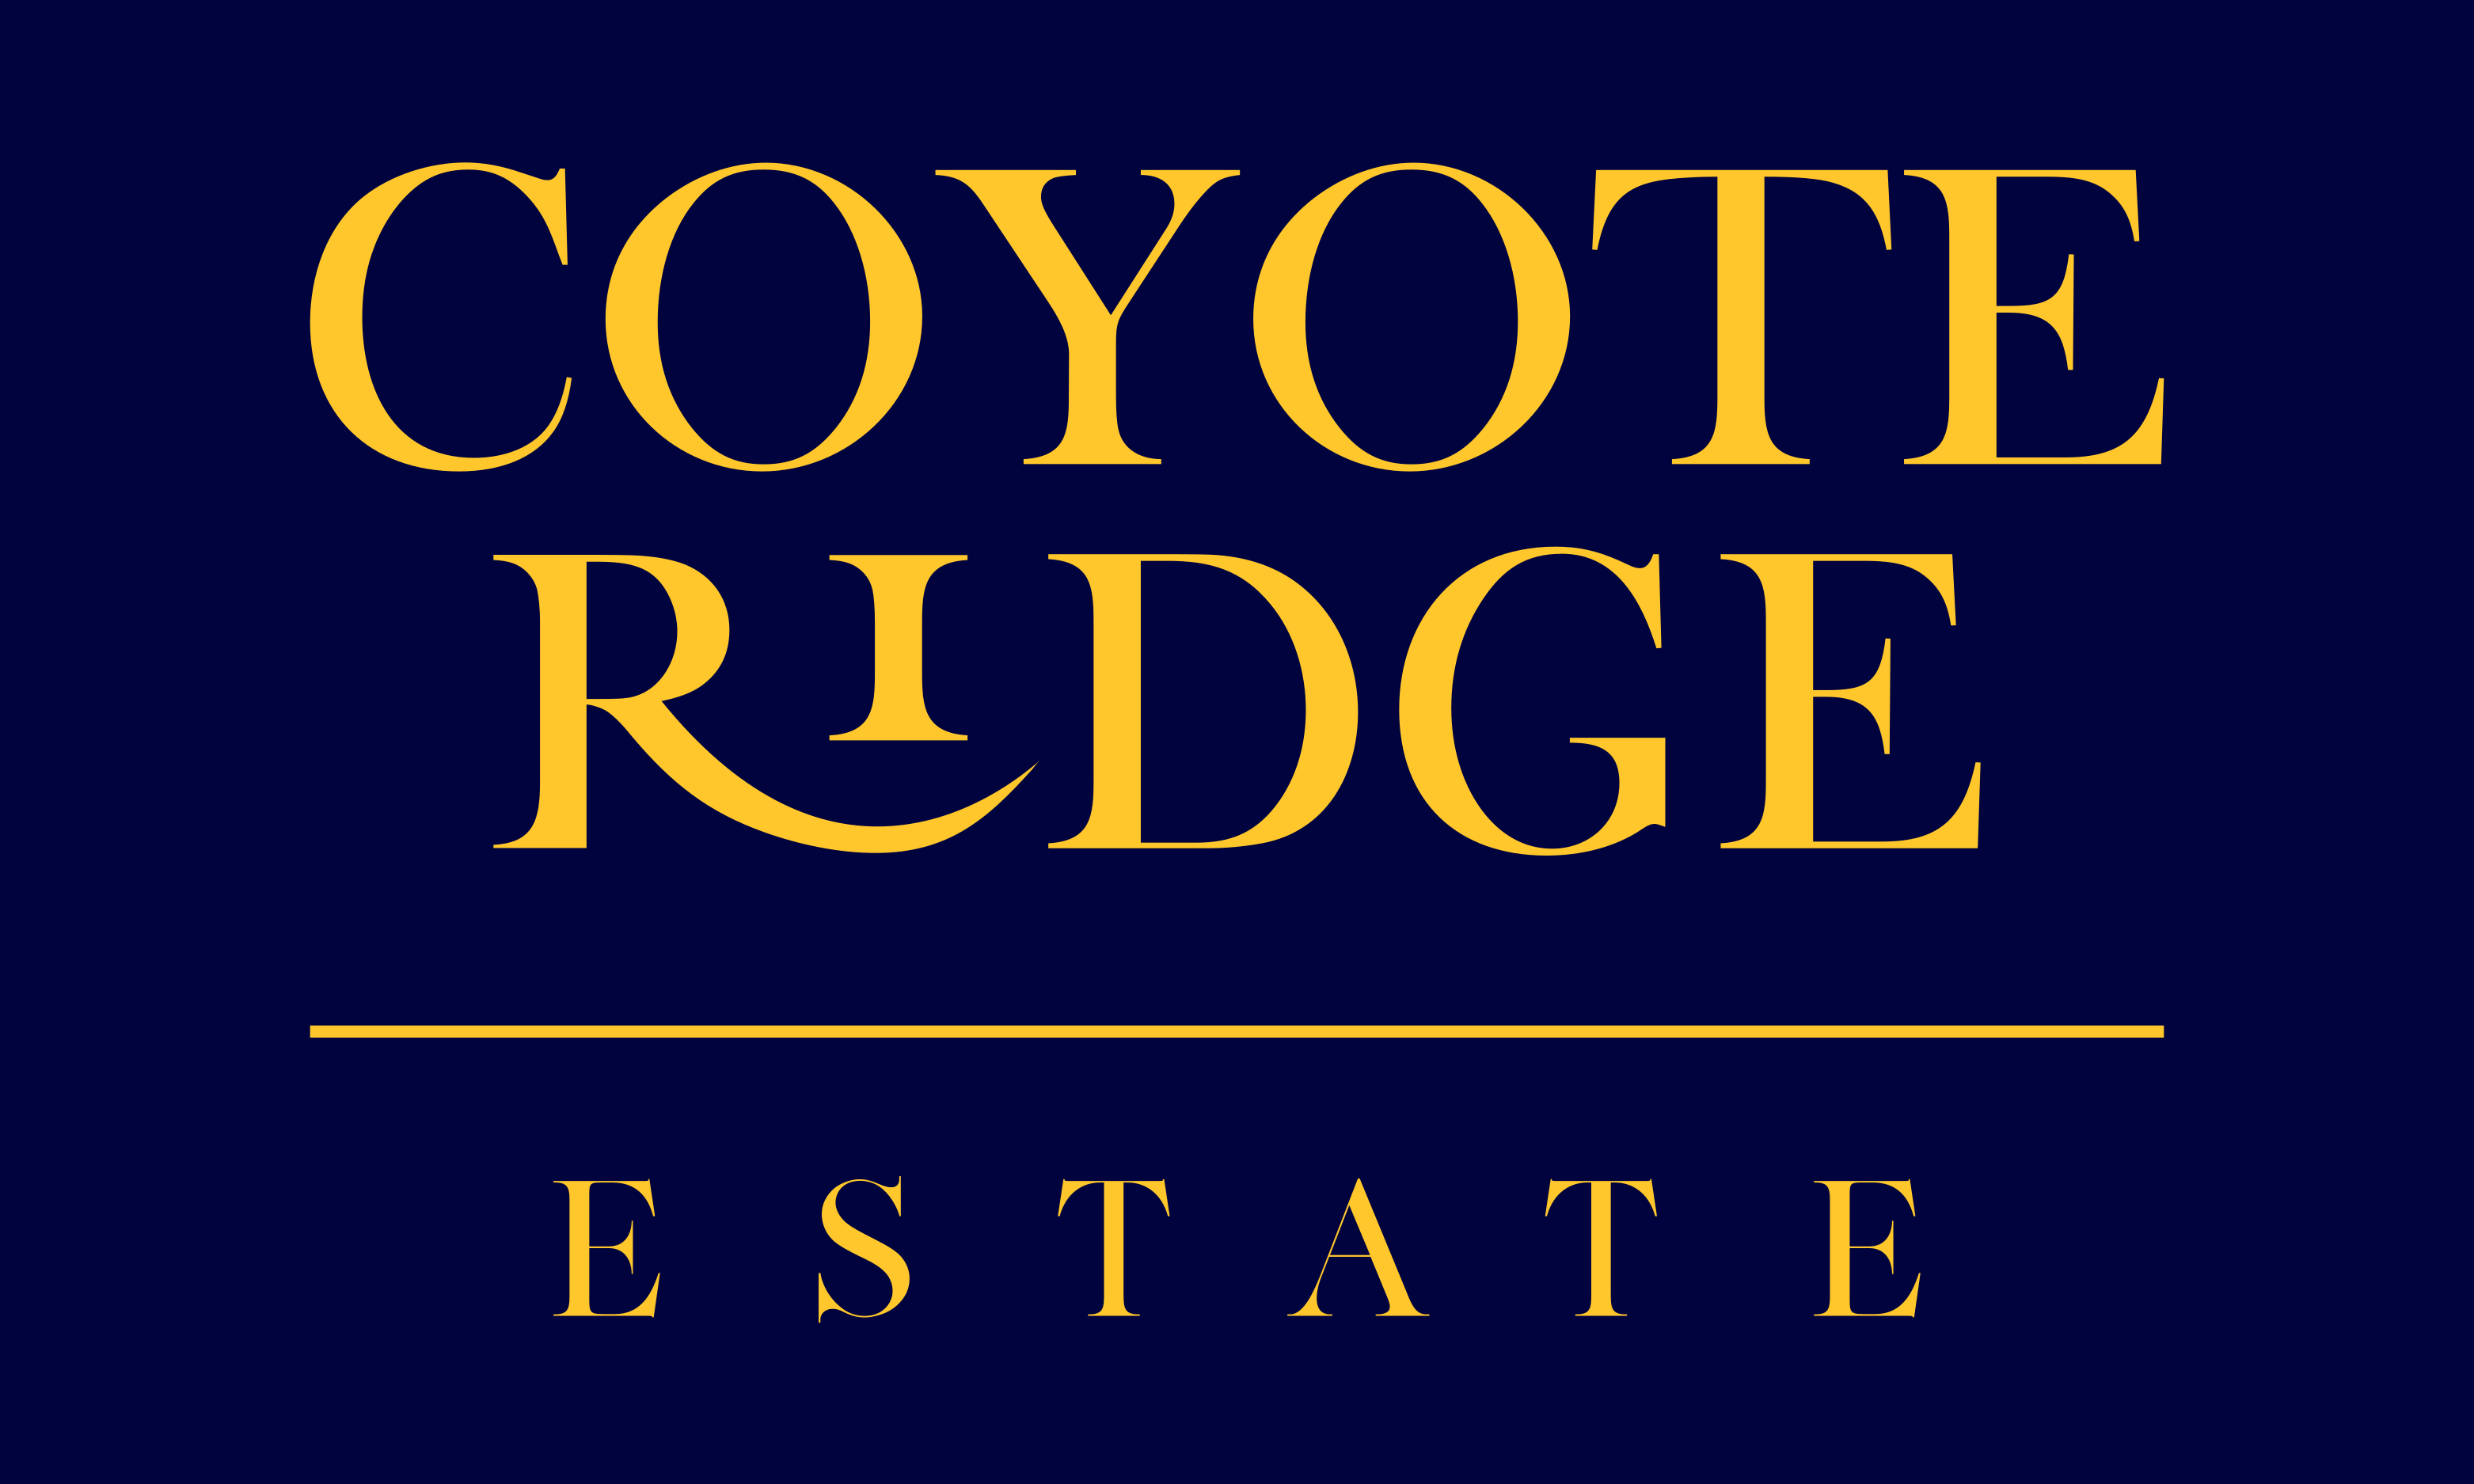 Coyote Ridge Estate